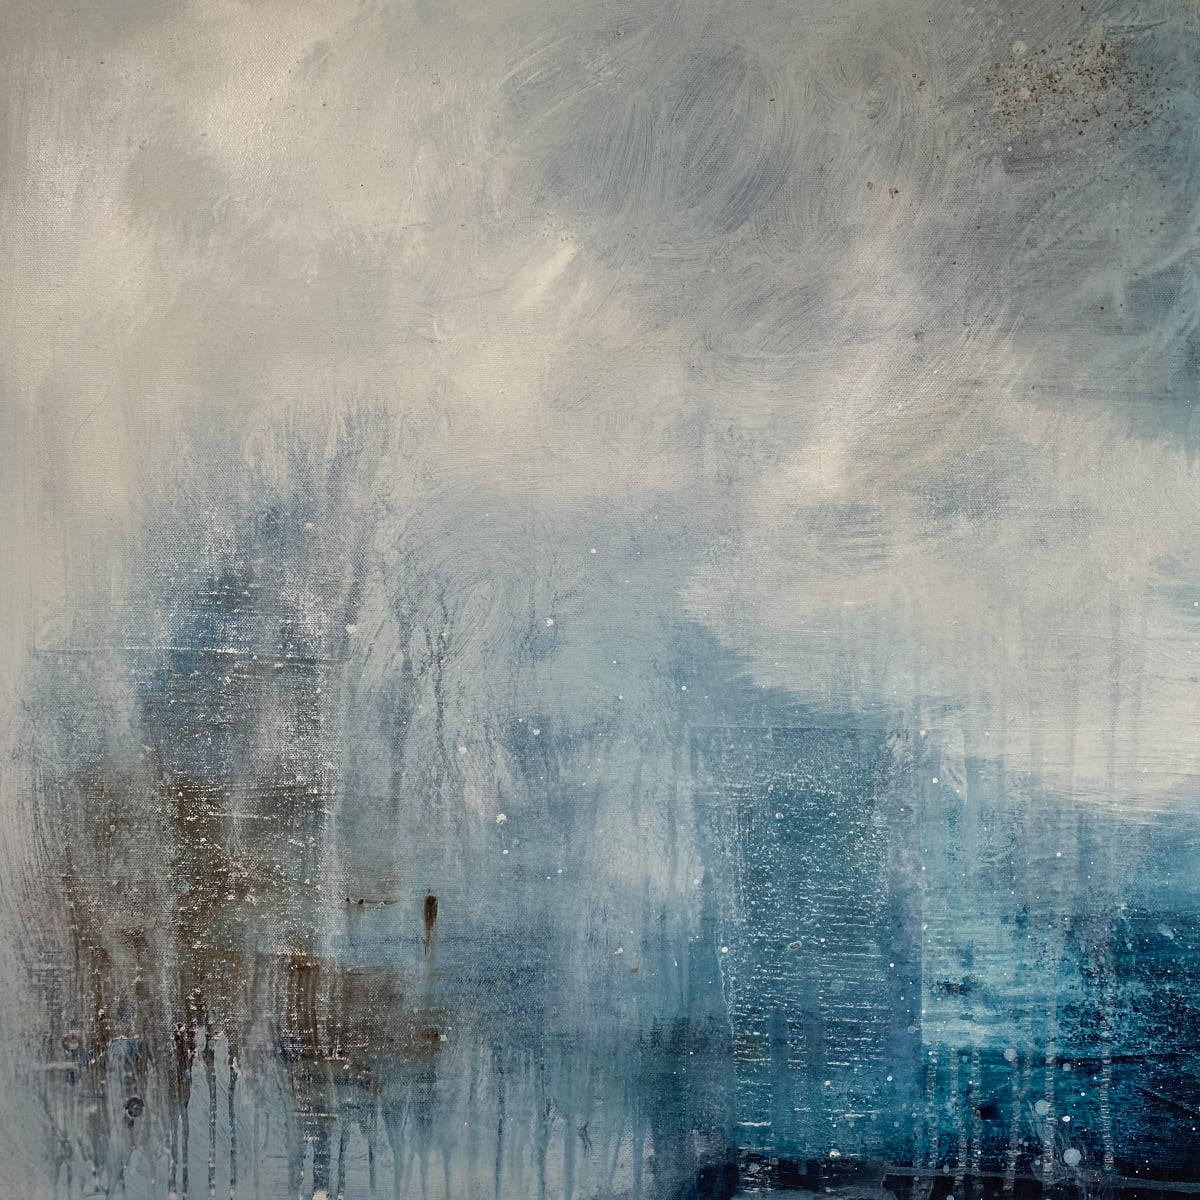 Water Sonnet - Mist by Claire Hankey 